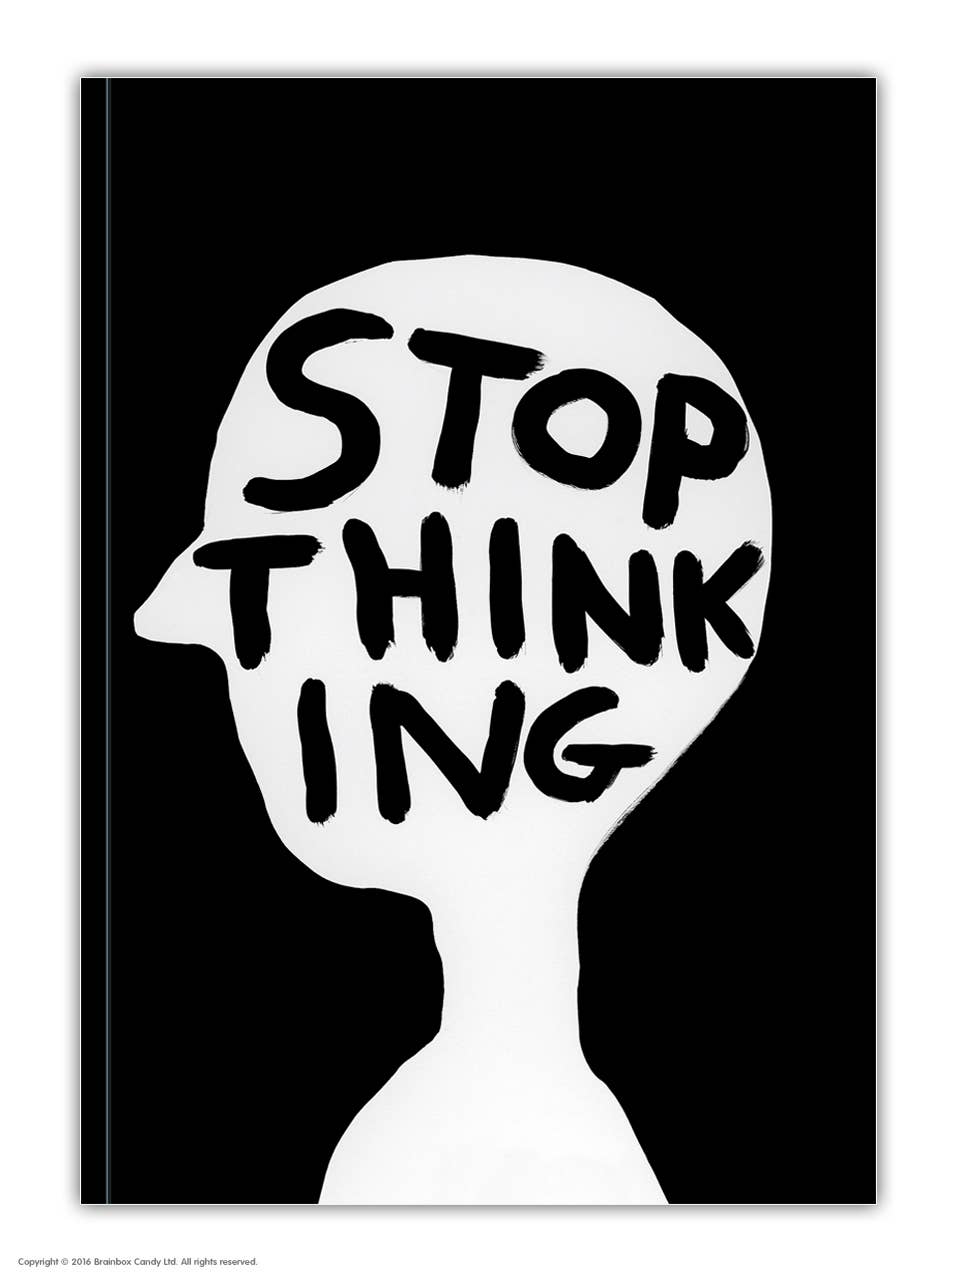 David Shrigley "Stop Thinking" Notebook - A6